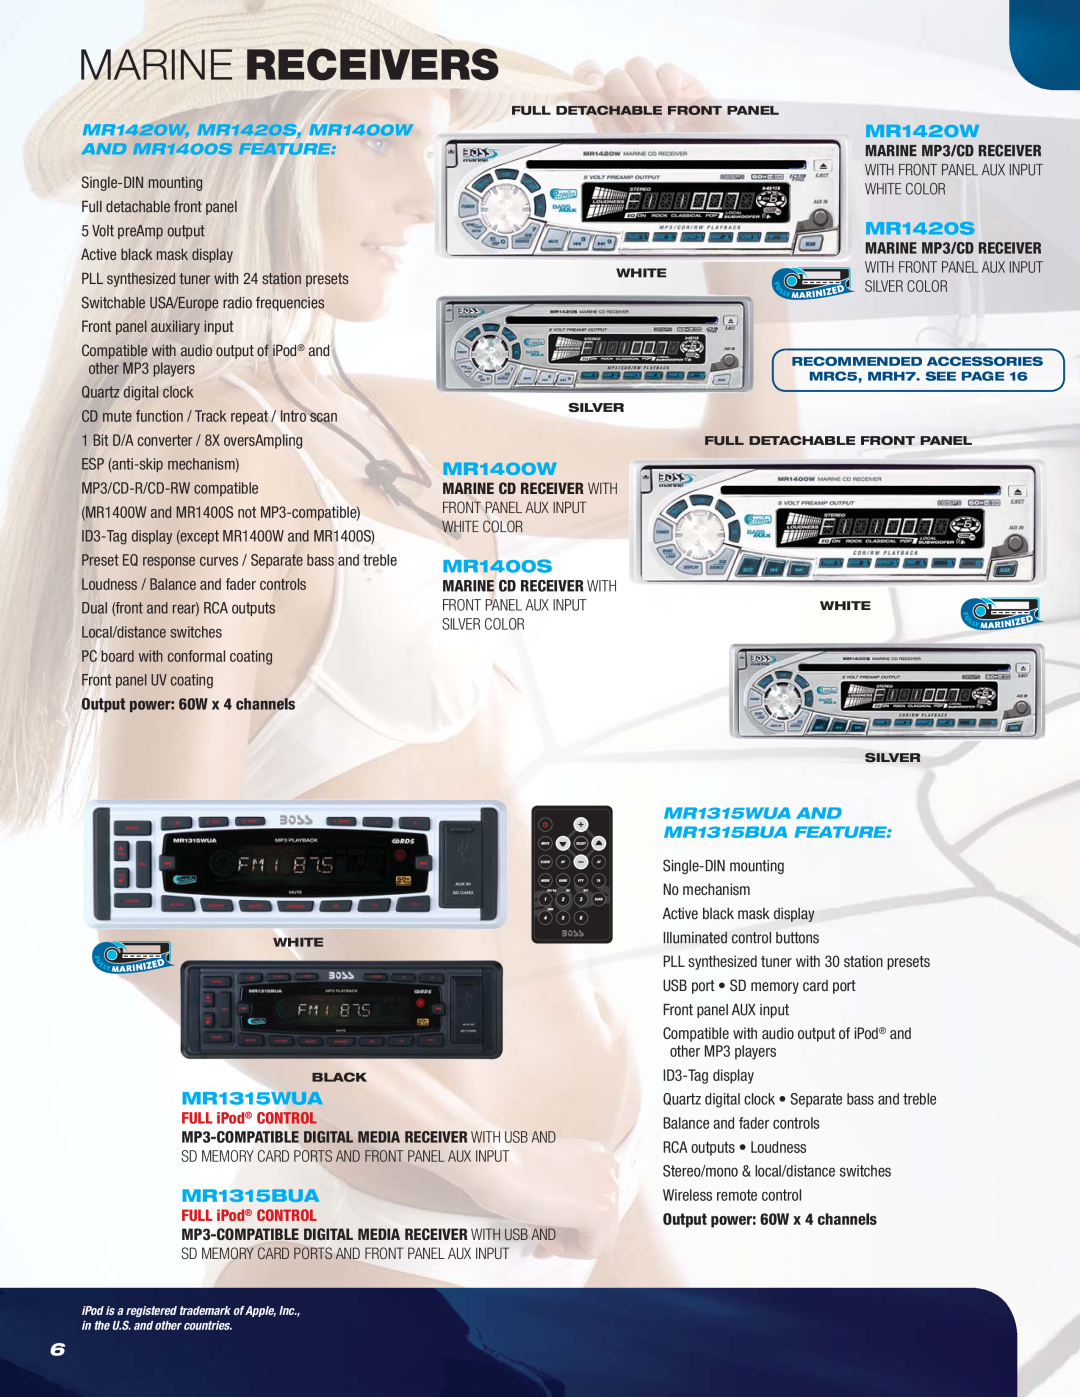 Boss Audio Systems MR1620S Marine Receivers, MR1400W, MR1400S, MR1420W, MR1420S, MR1315WUA, MR1315BUA, FULL iPod CONTROL 